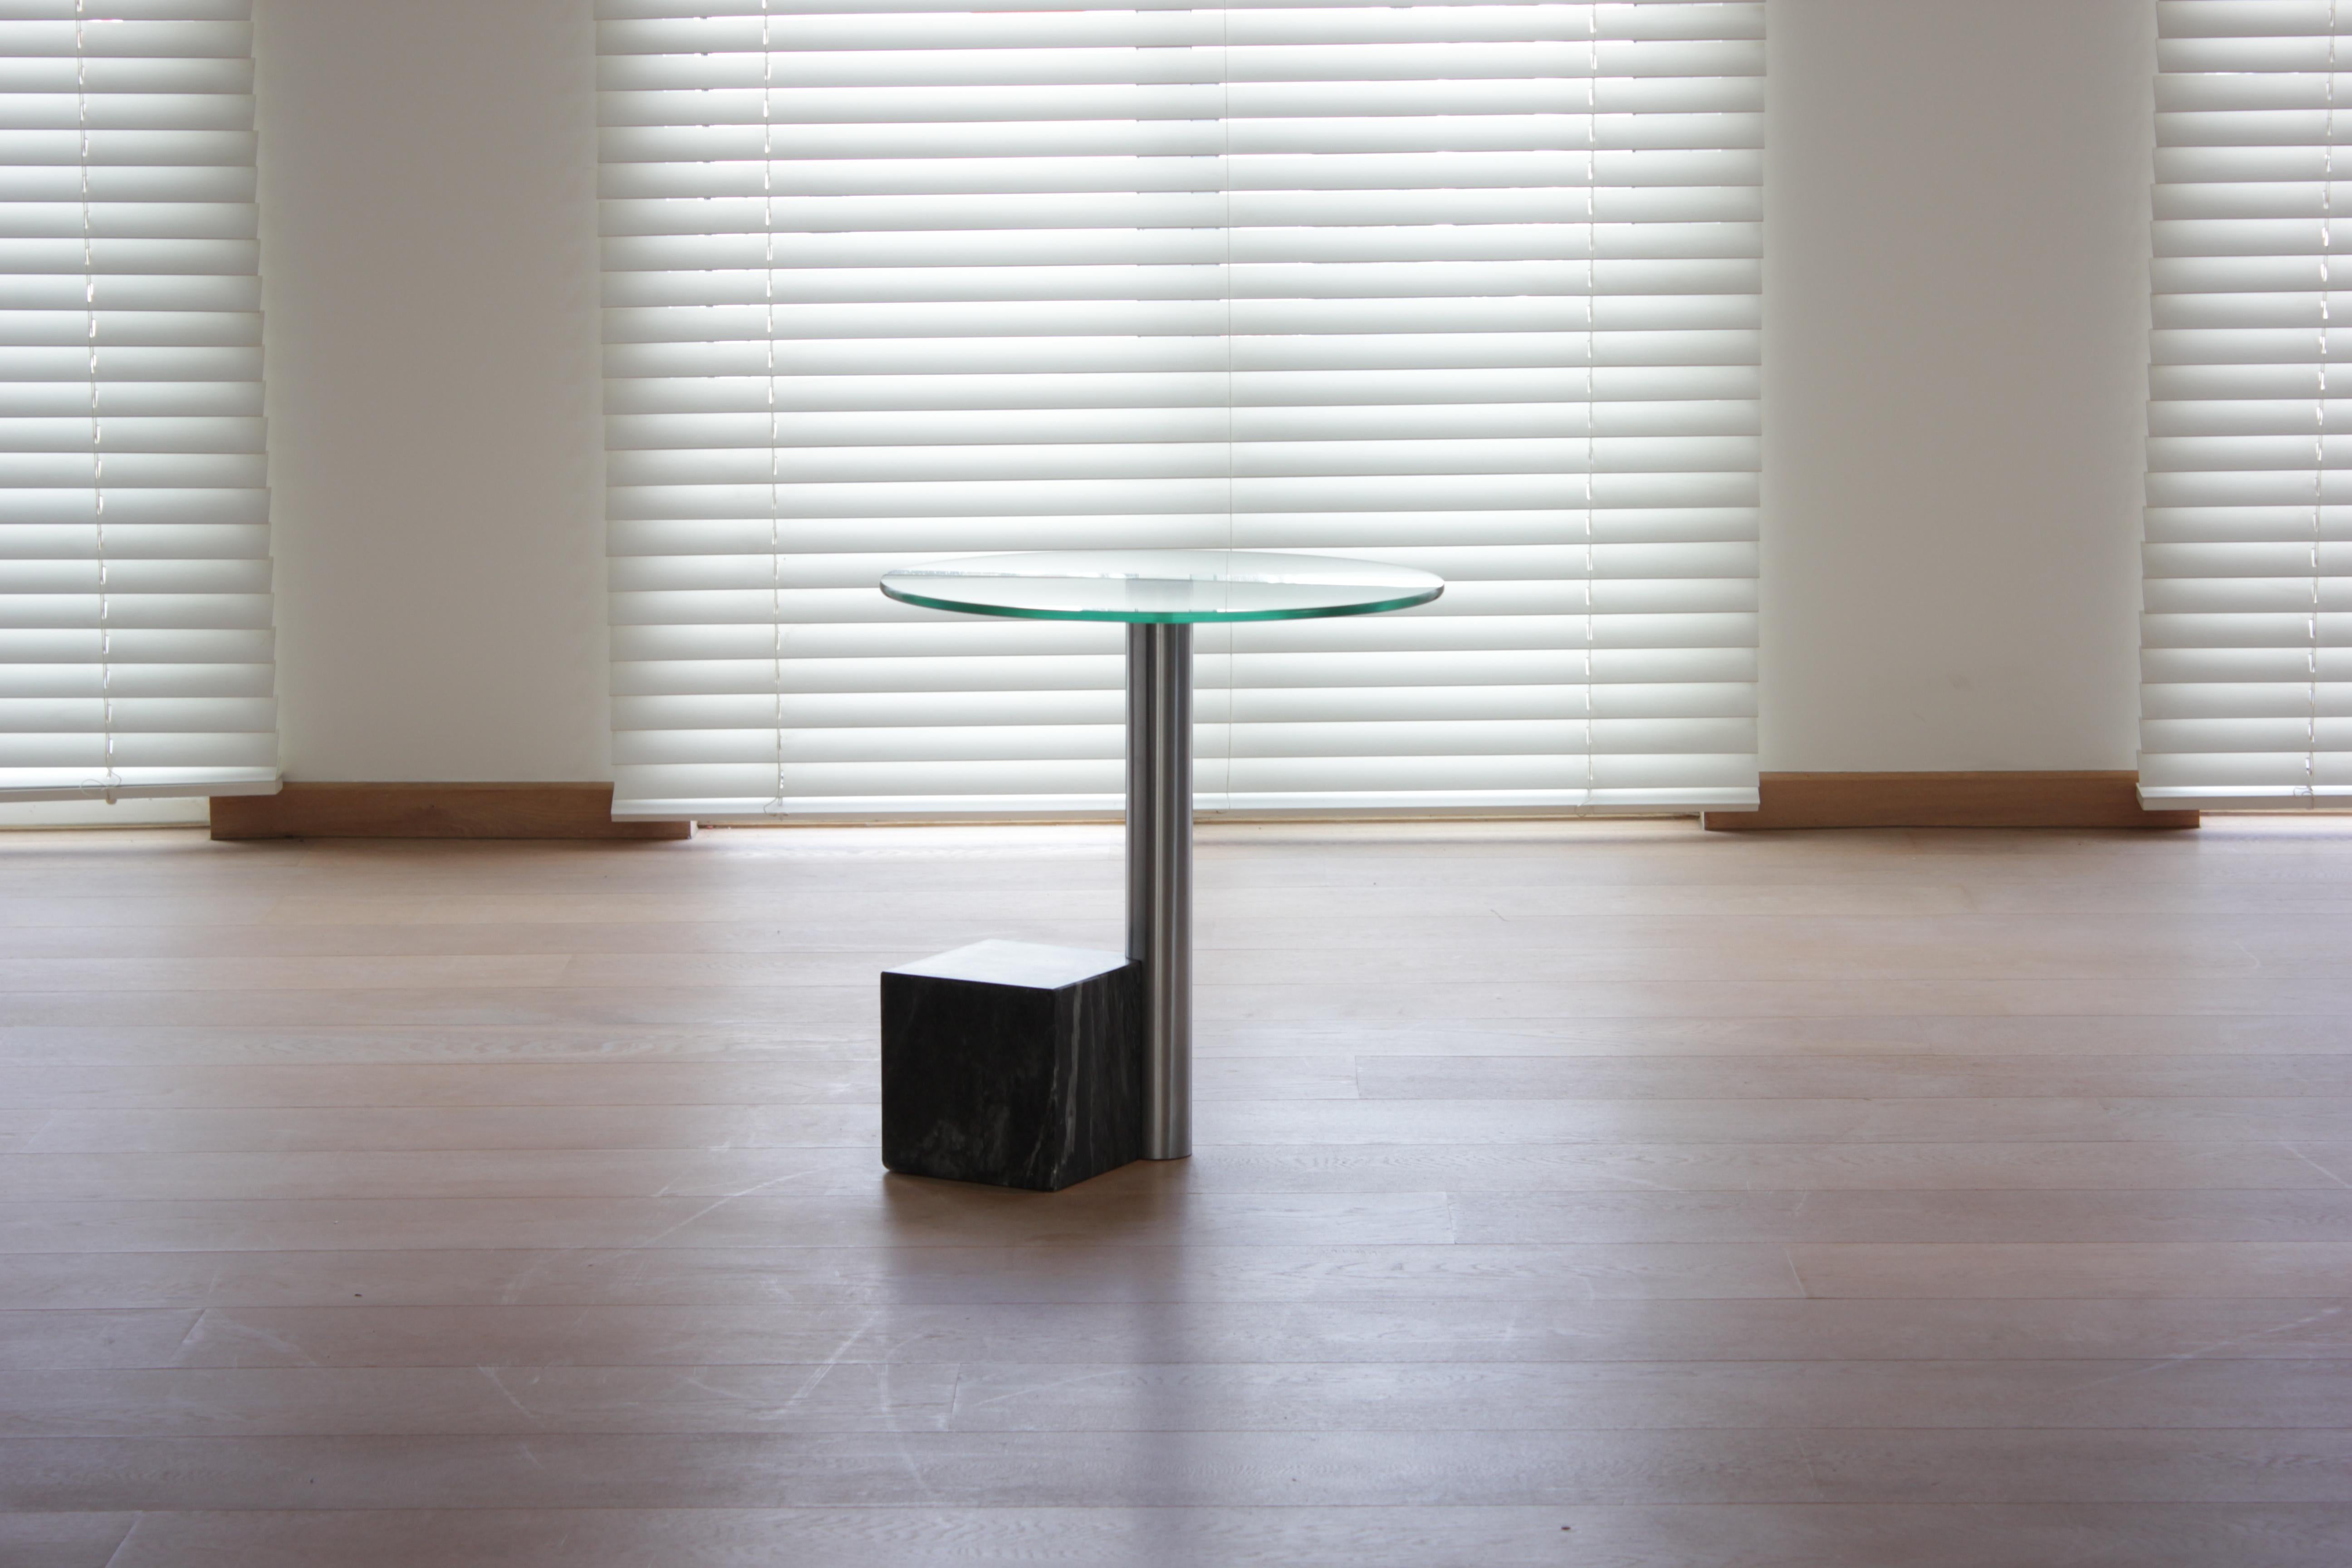  Post-Modern HK2 Side table by Hank Kwint for Metaform For Sale 4